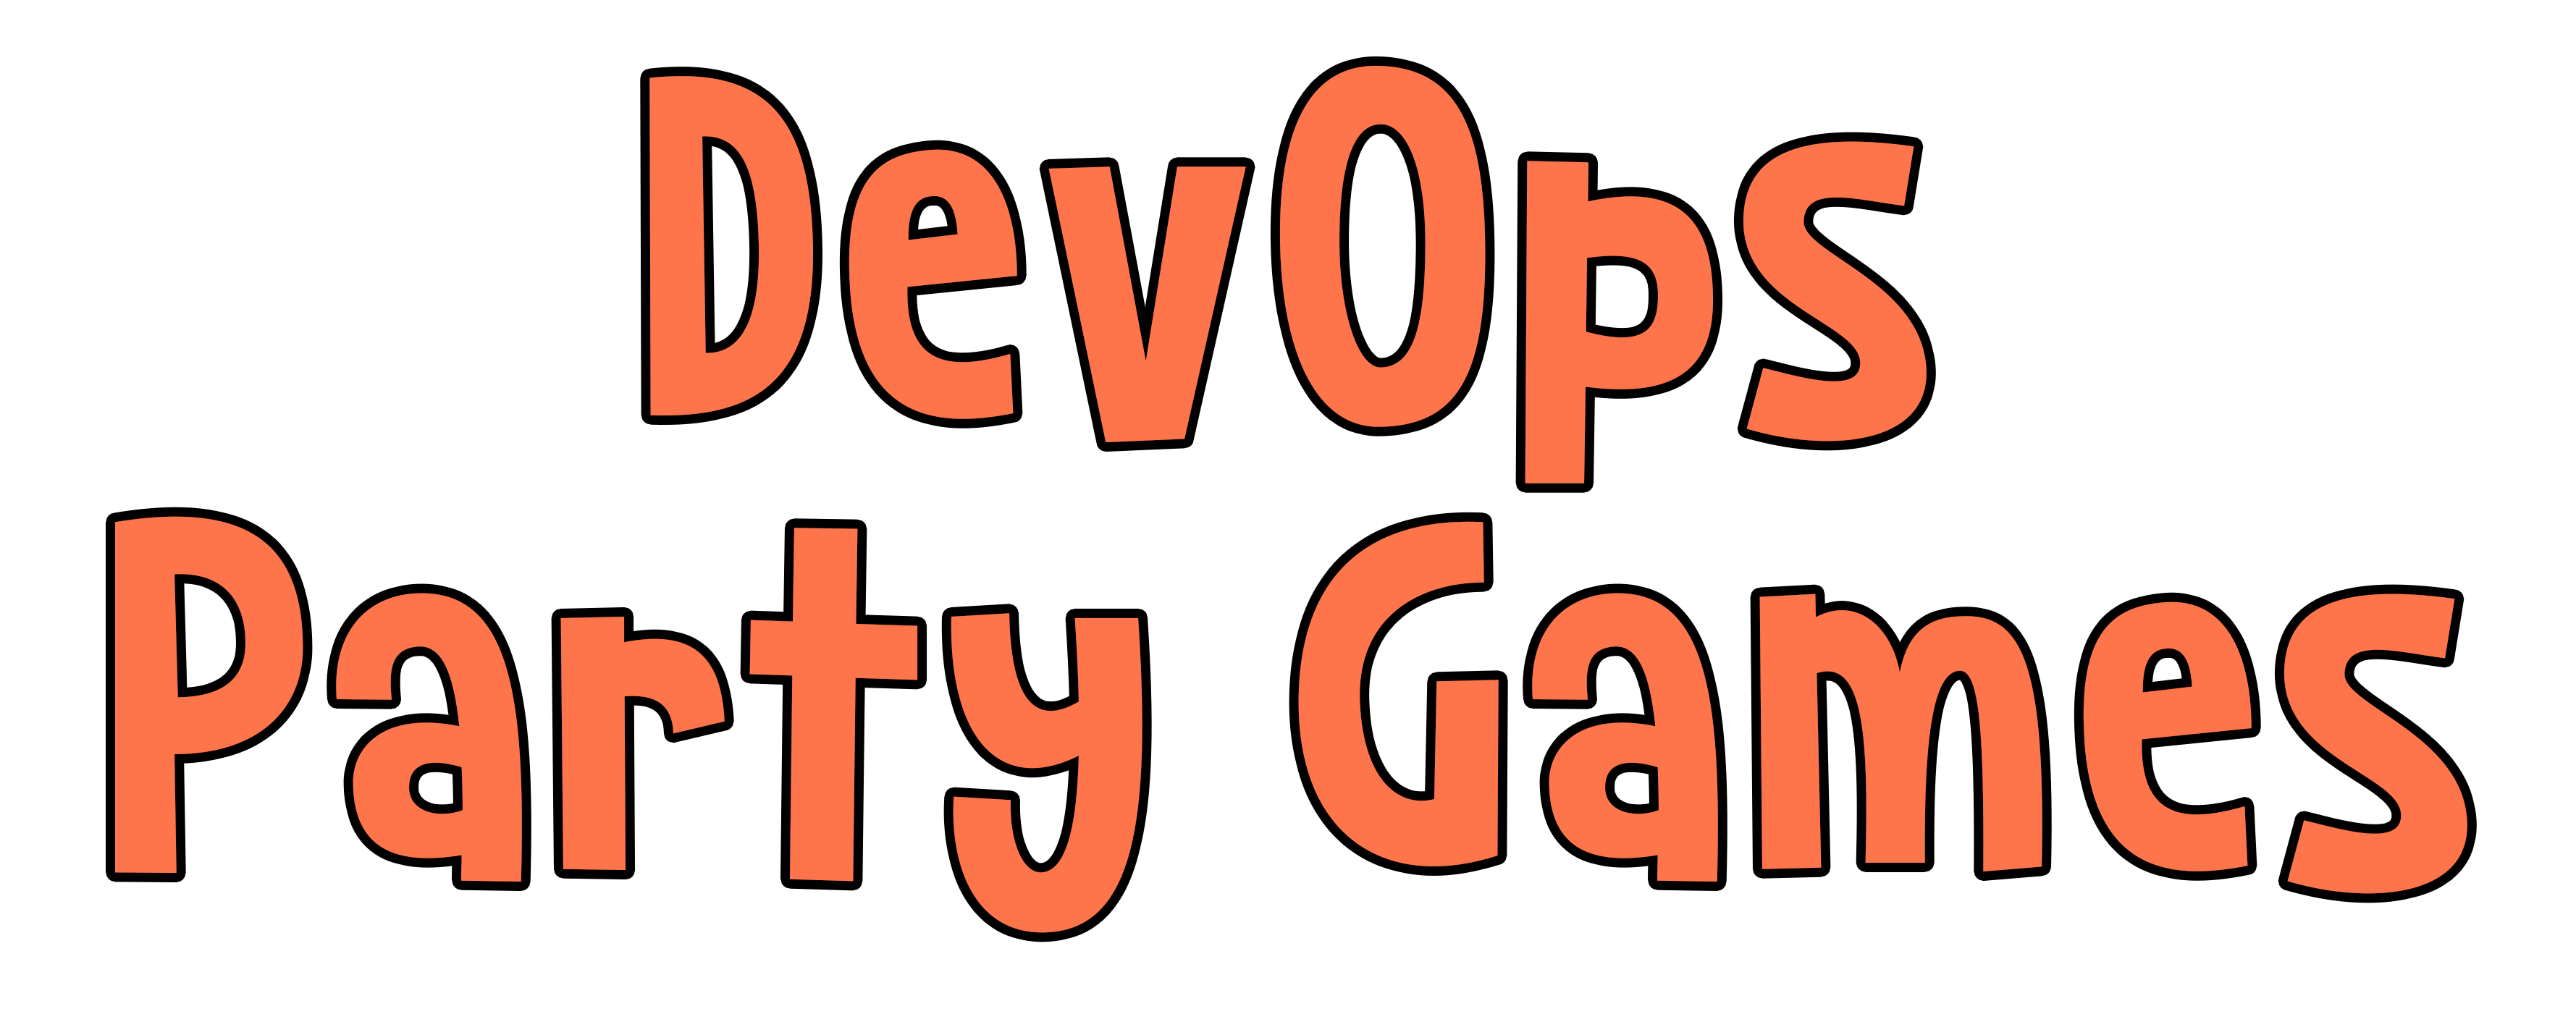 DevOps Party Games